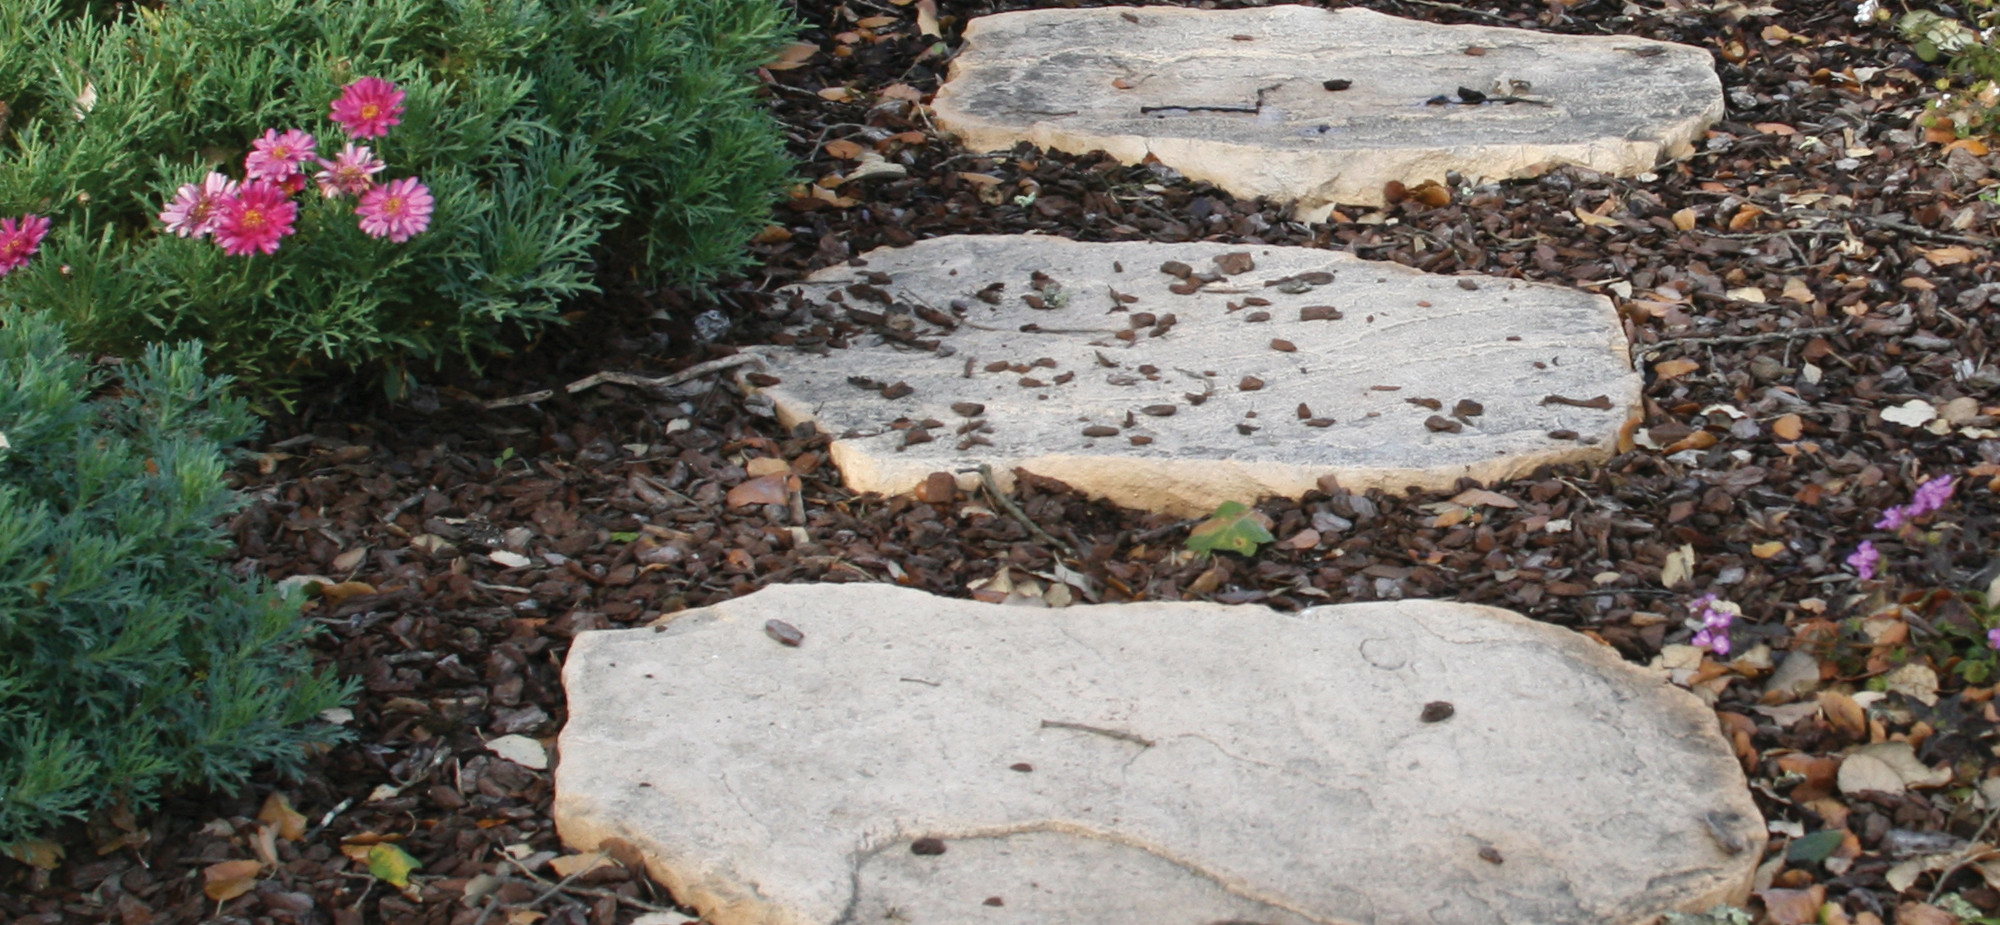 Muros Hadrien  Fabistone - Muros de jardim em pedra reconstituída